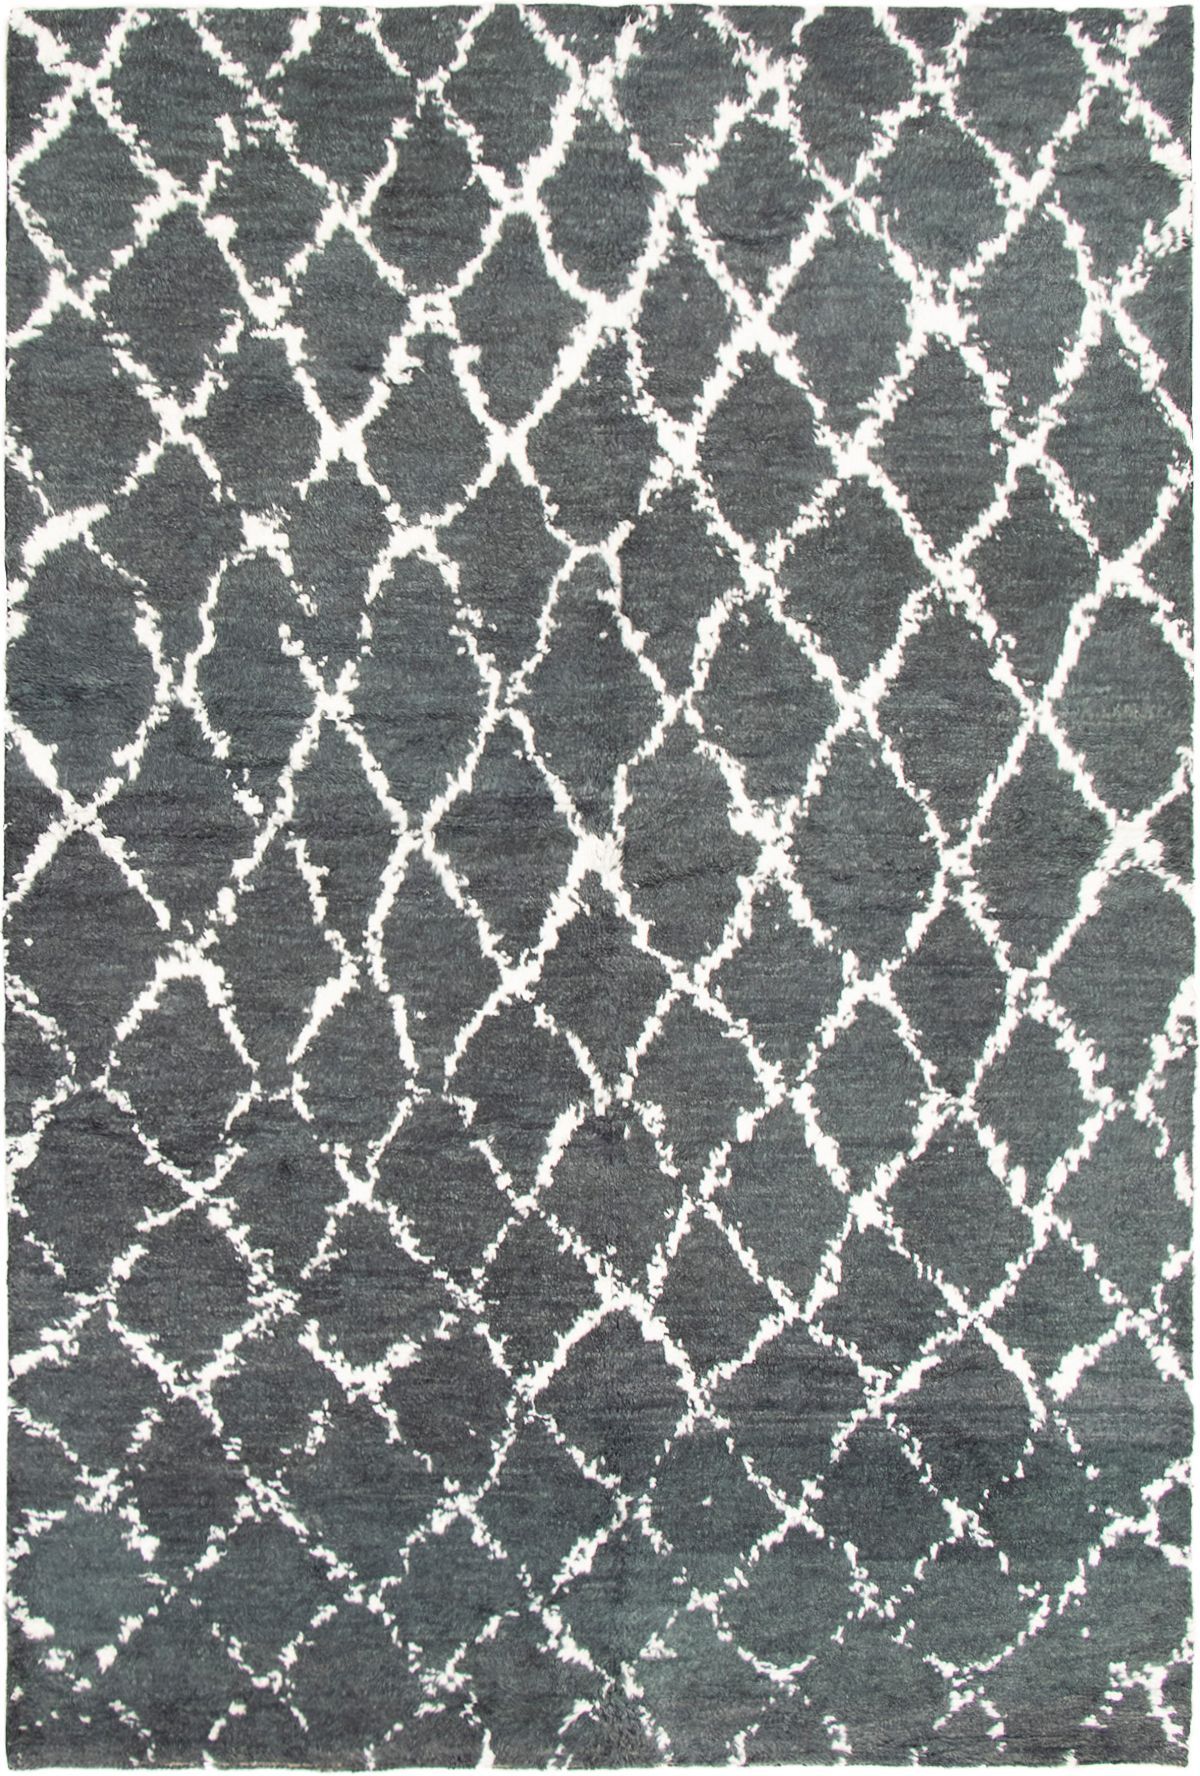 Hand-knotted Arlequin Dark Grey Wool Rug 6'0" x 9'0"  Size: 6'0" x 9'0"  